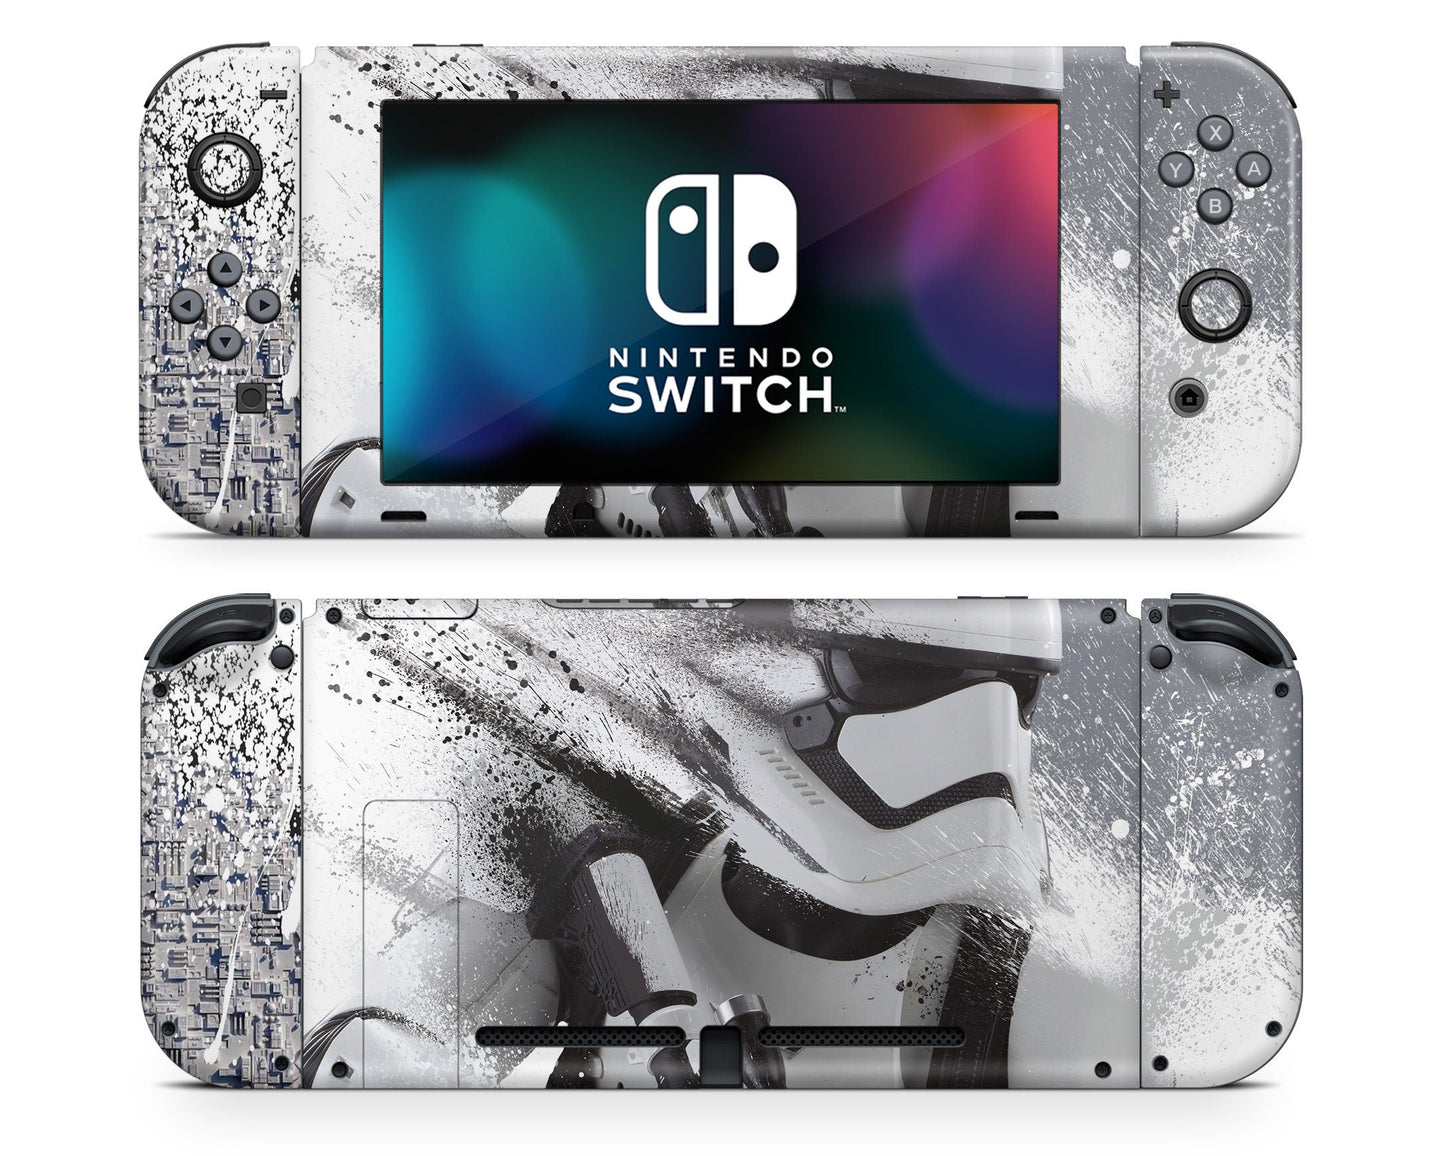 Star Wars Prequel Skin Pack for Nintendo Switch - Nintendo